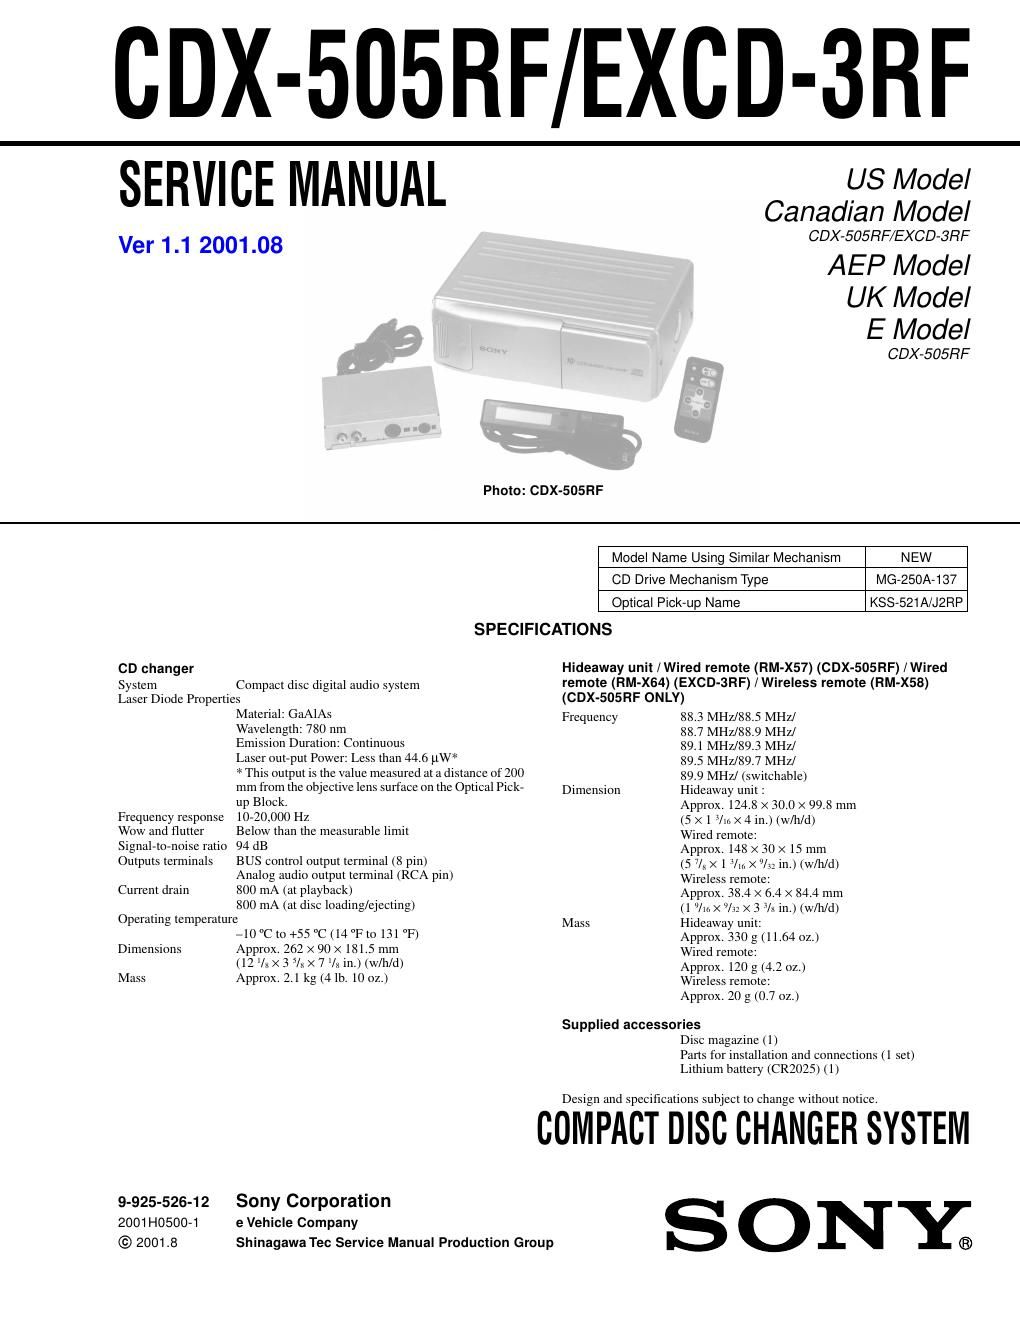 sony cdx 505 rf service manual